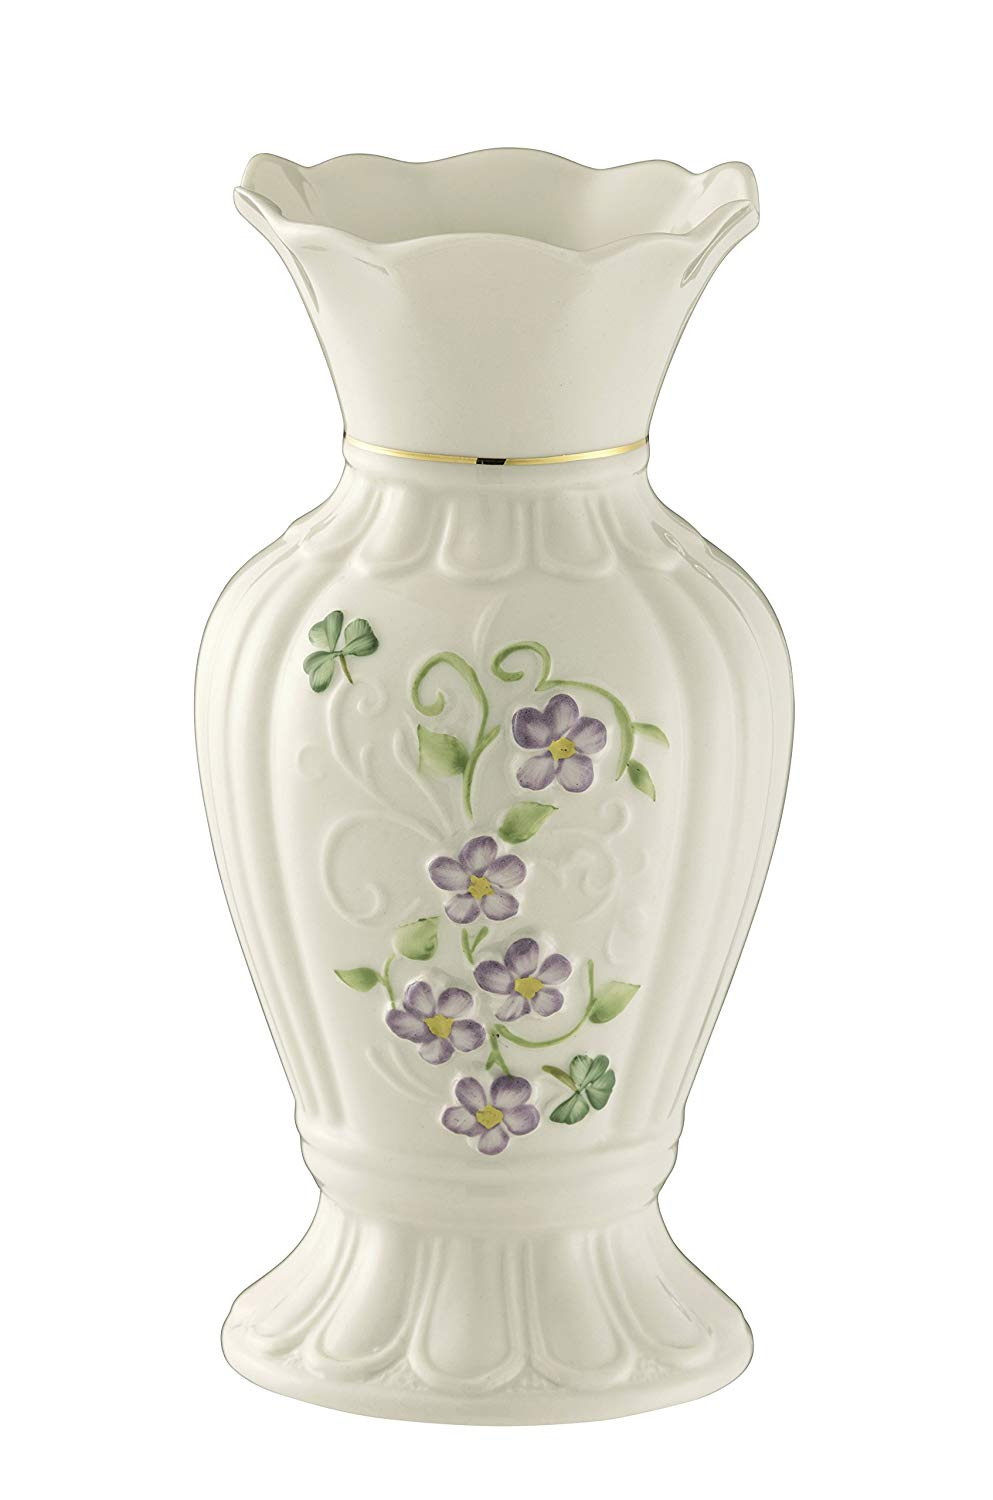 10 Lovable Lenox Bud Vases Set Of 3 2024 free download lenox bud vases set of 3 of amazon com belleek pottery floral irish flax vase home kitchen for 71h8ovhc5pl sl1500